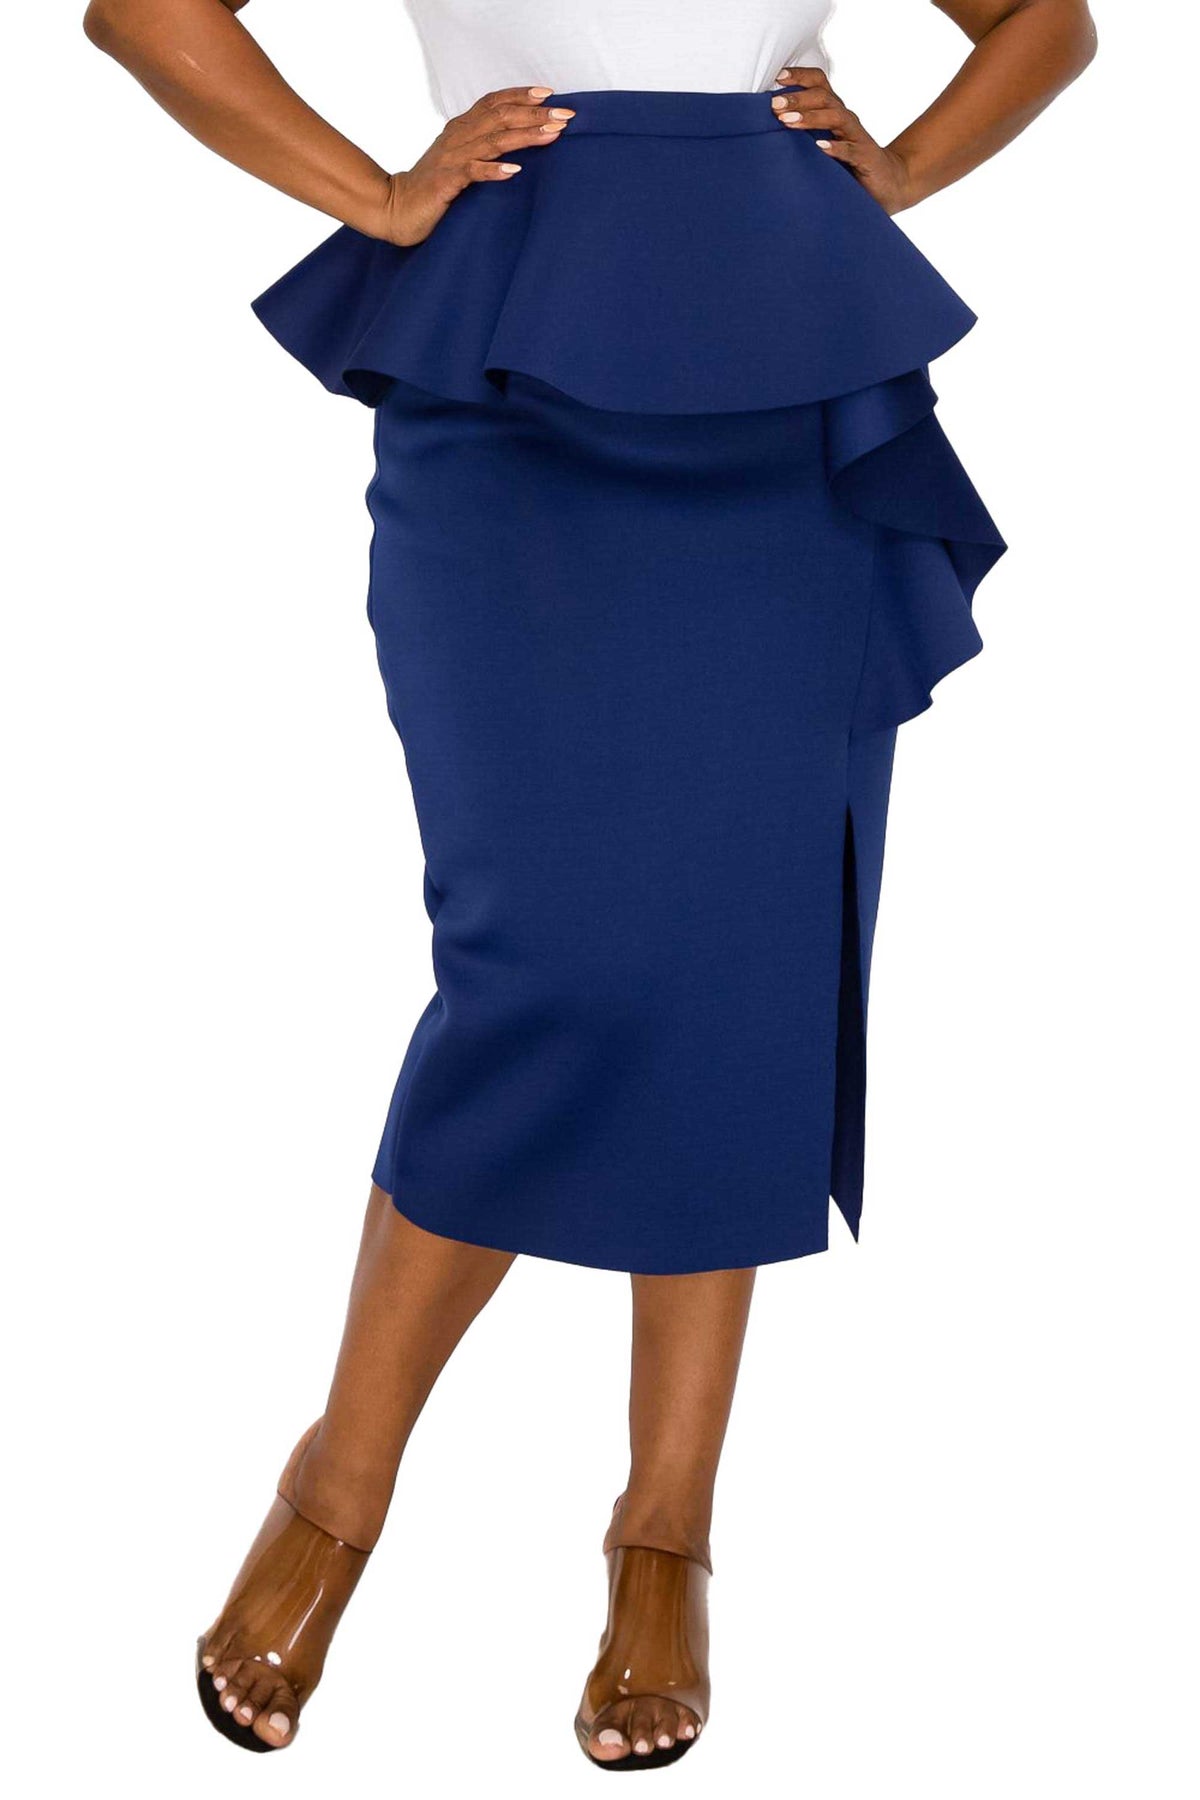 livd L I V D women's trendy contemporary plus size peplum midi skirt with ruffles and leg slit neoprene air scuba fabric in navy